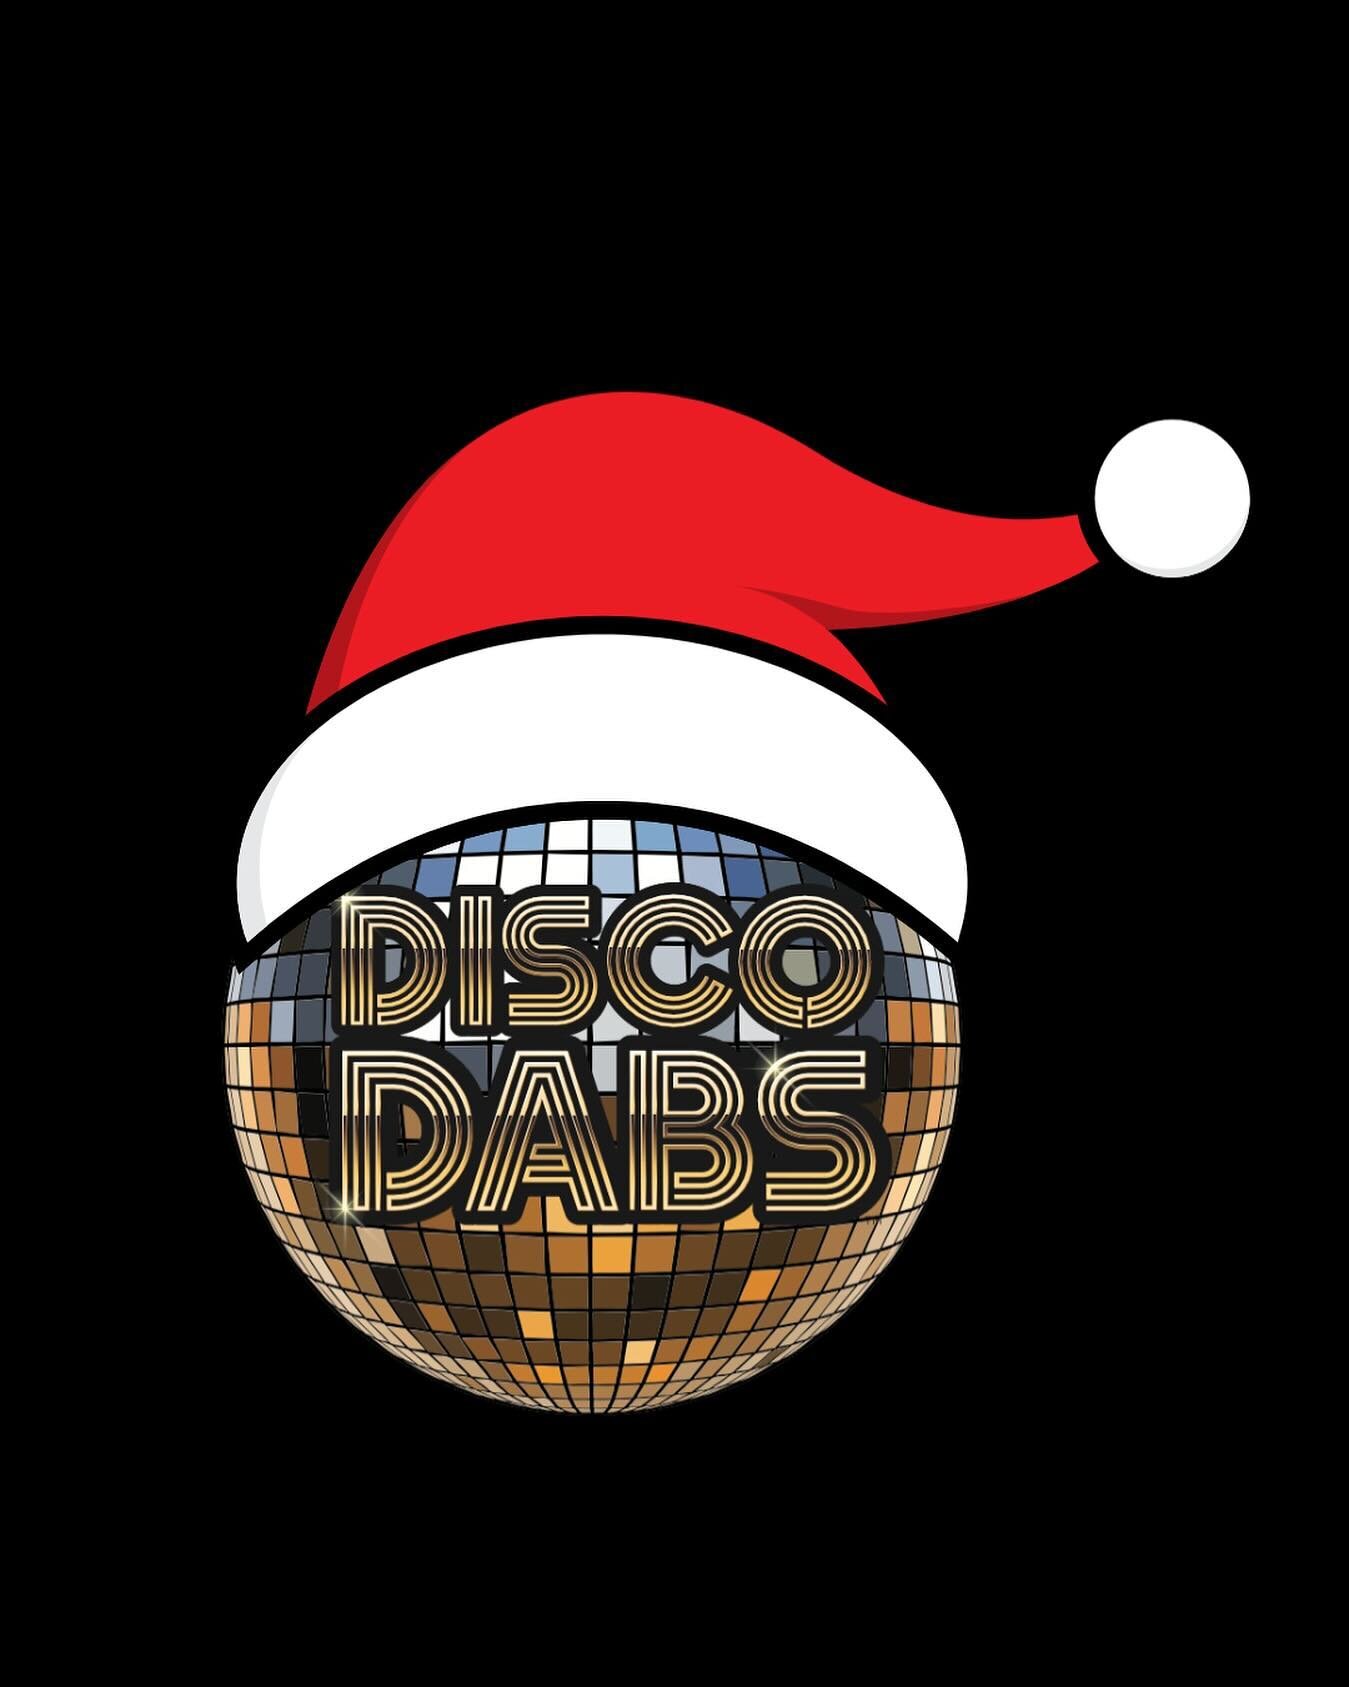 Merry Christmas from The Disco Dabs Squad🪩🎅🏼
.
.
.
.
#hopeyourholidaysarelit #happyholidays #dabbingthroughthesnow #funkyfestivities